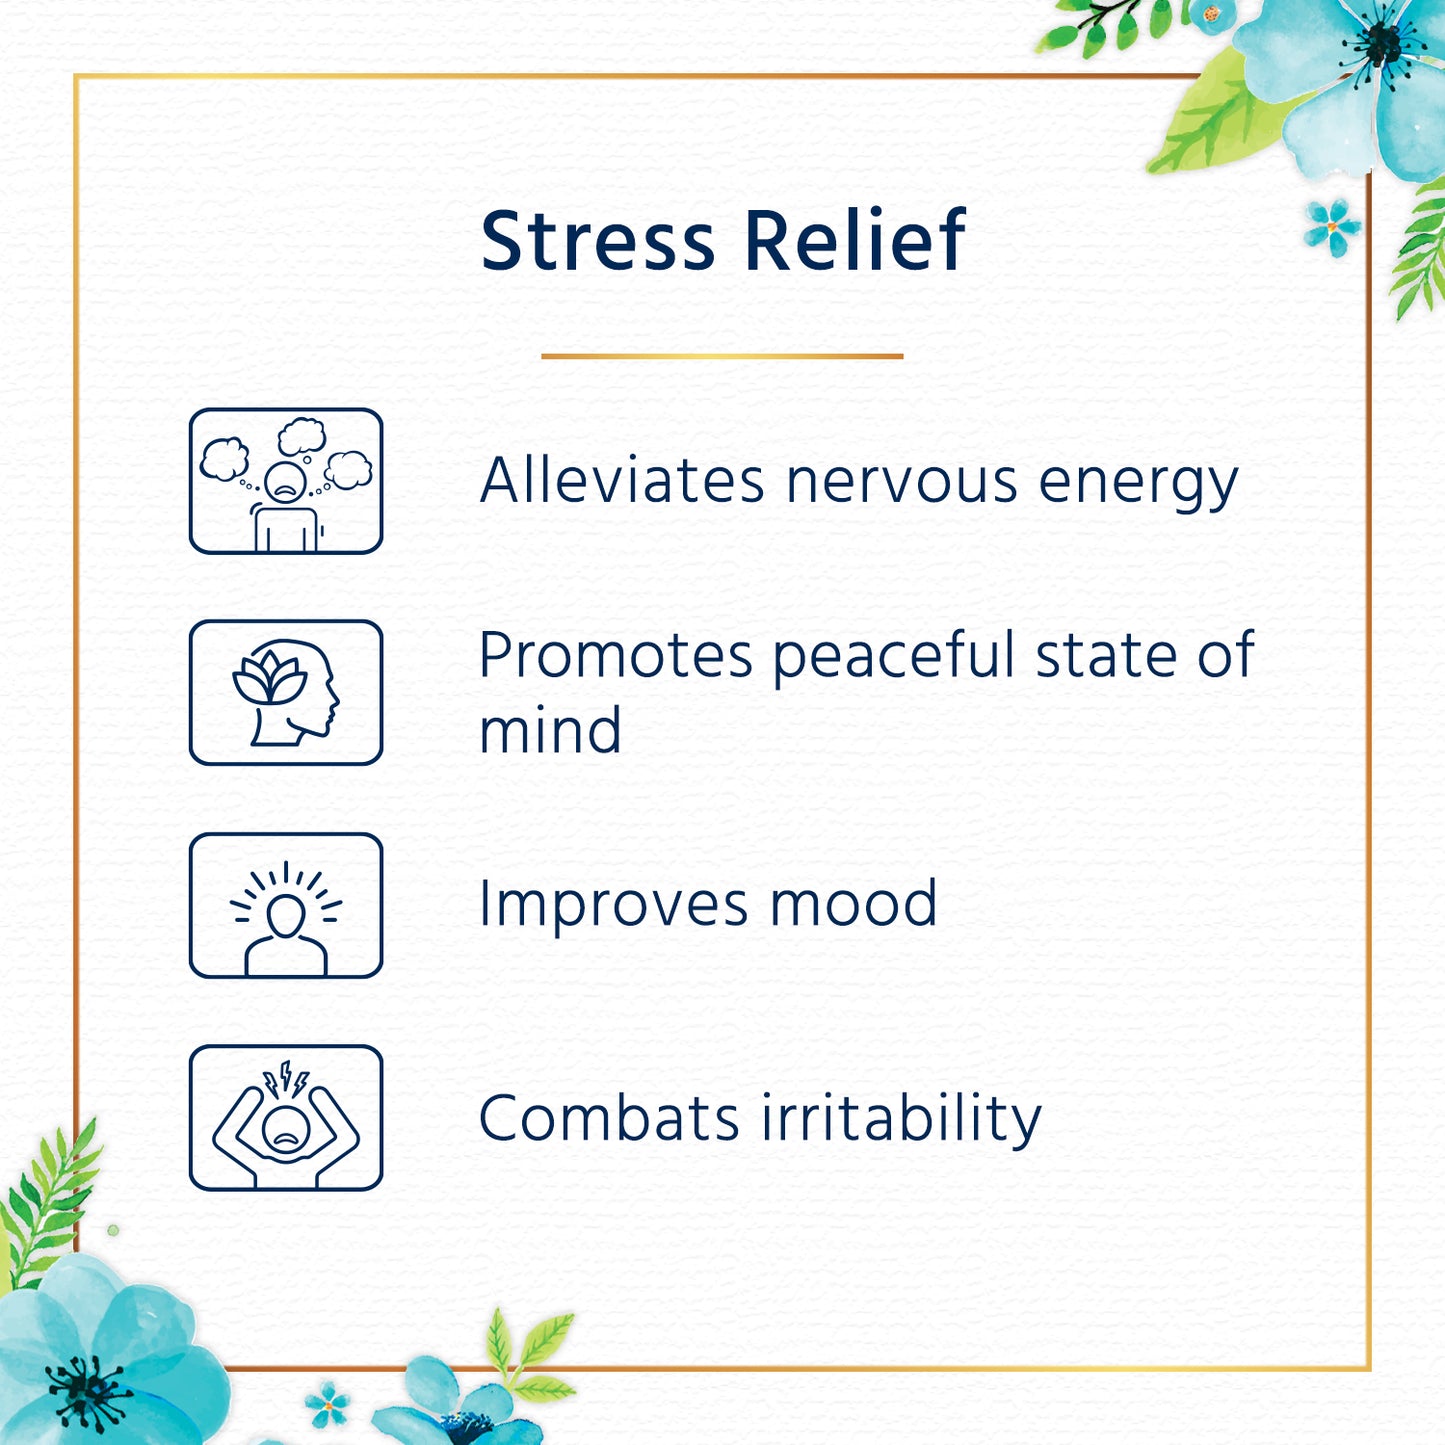 Stress Relief Aromatherapy Spray 8ml